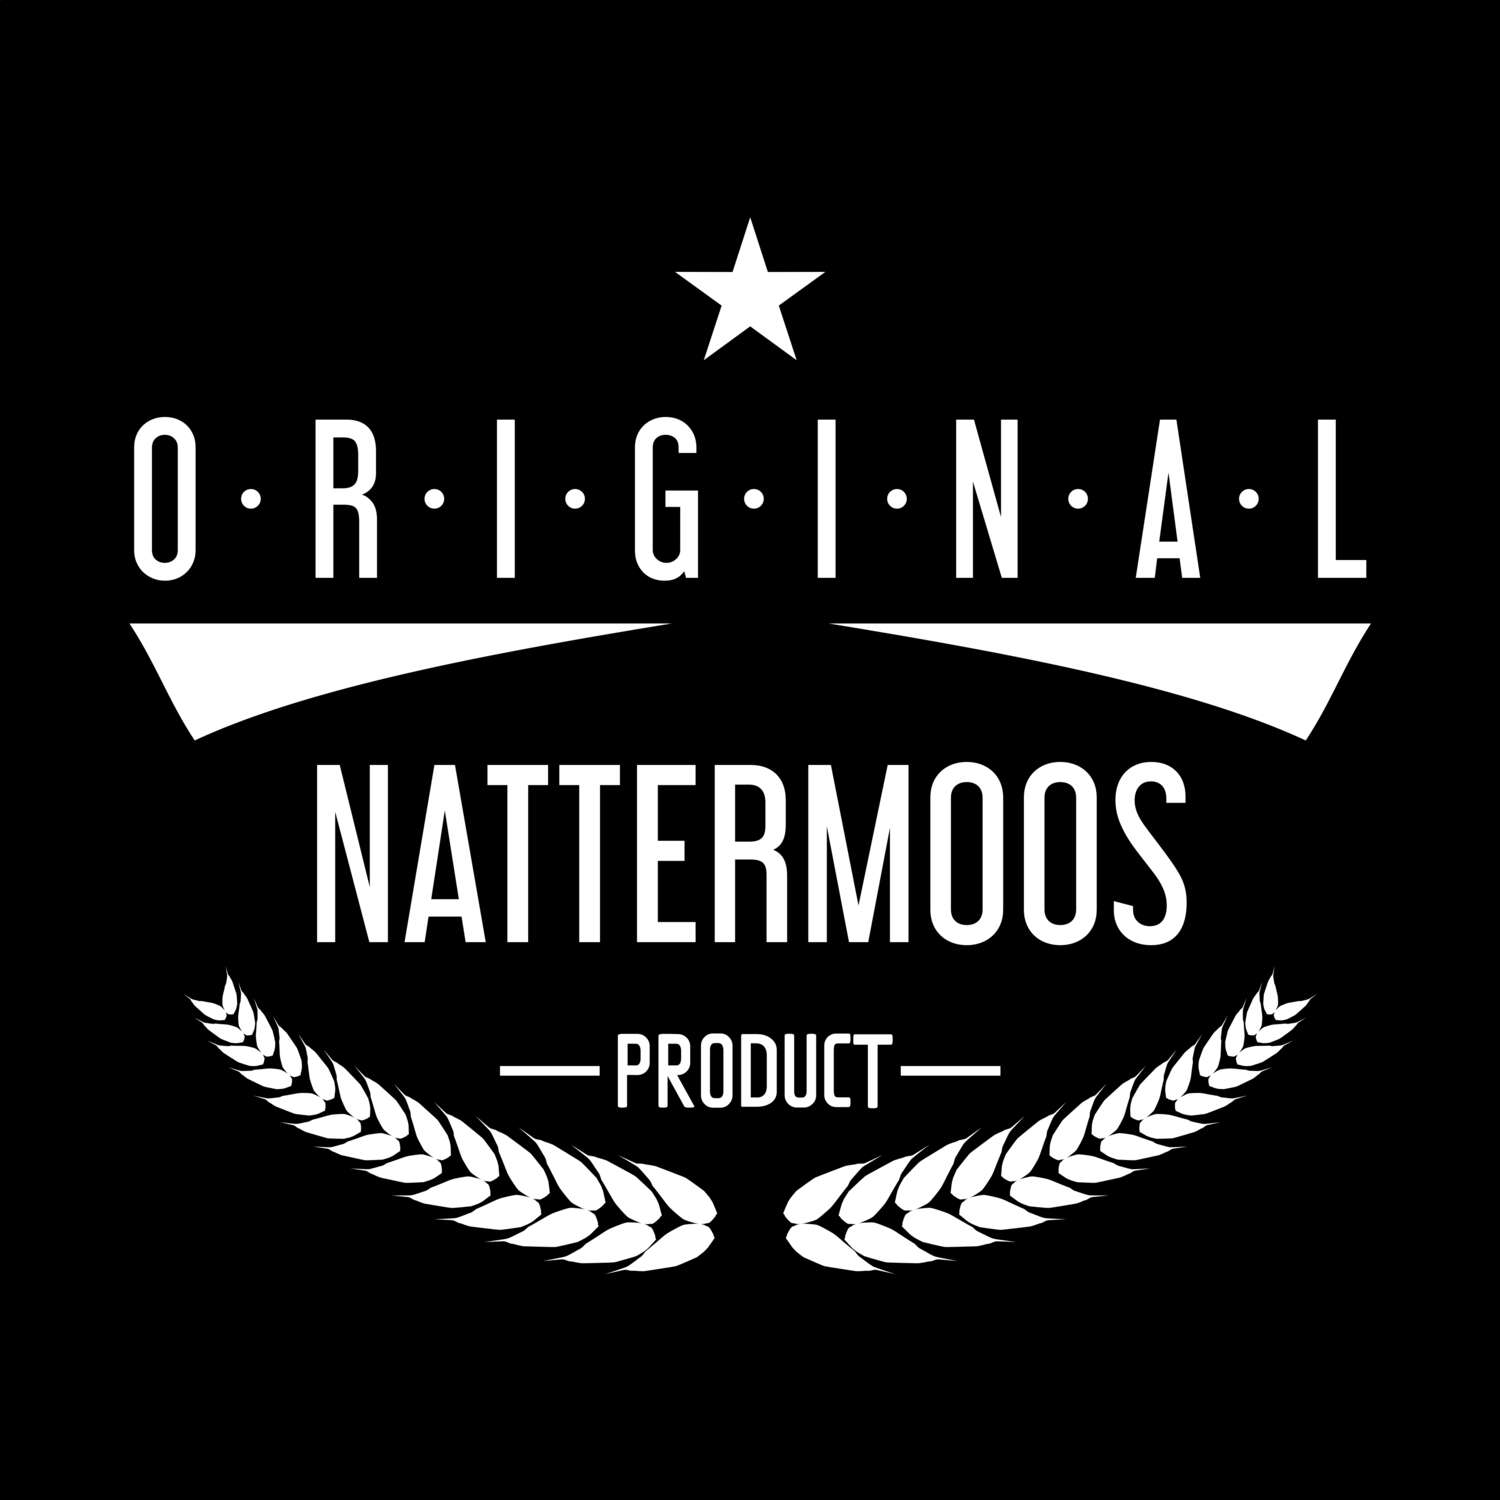 Nattermoos T-Shirt »Original Product«